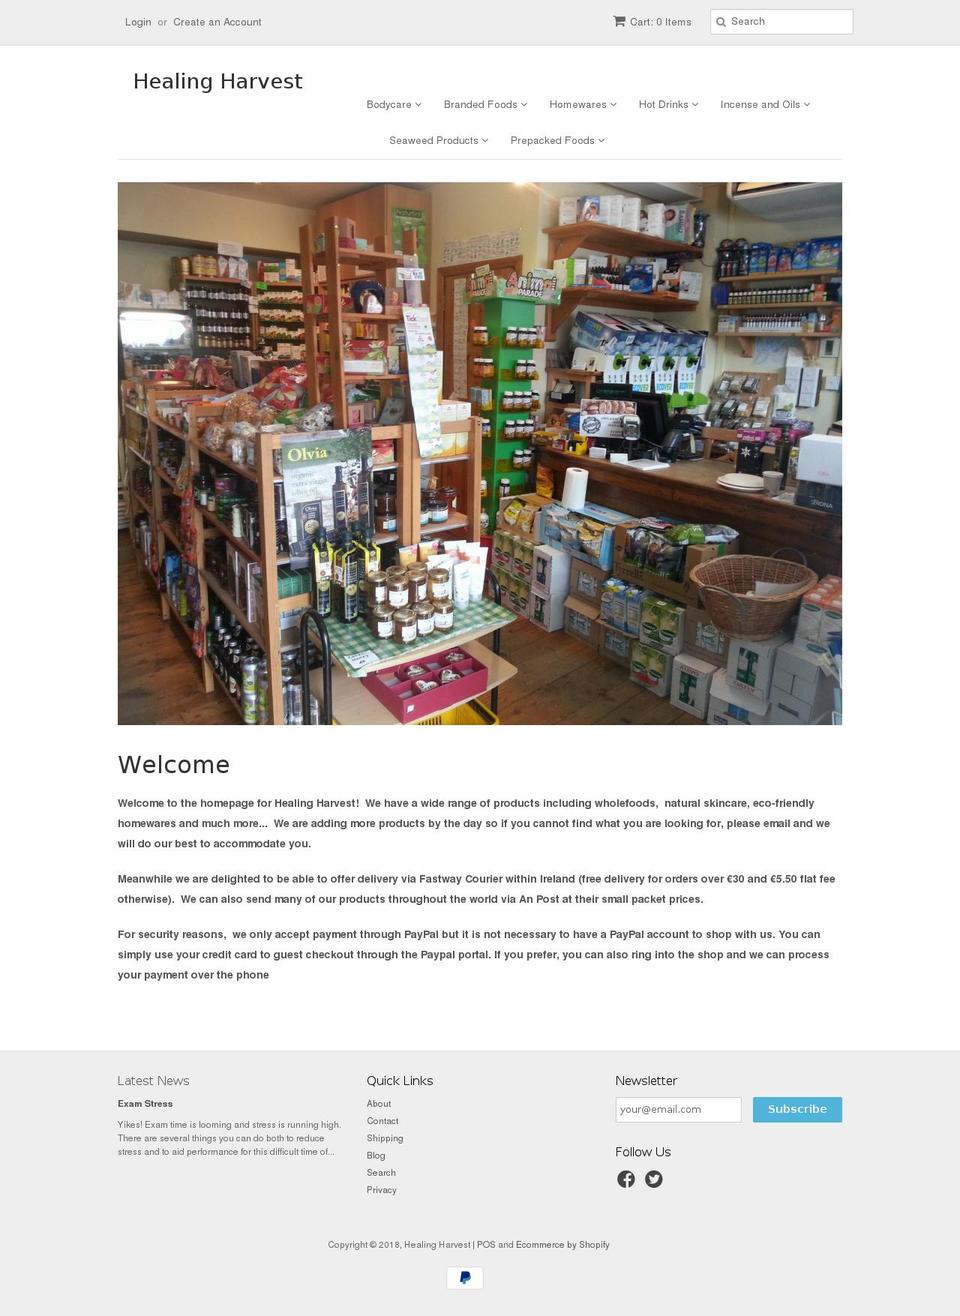 healingharvest.ie shopify website screenshot